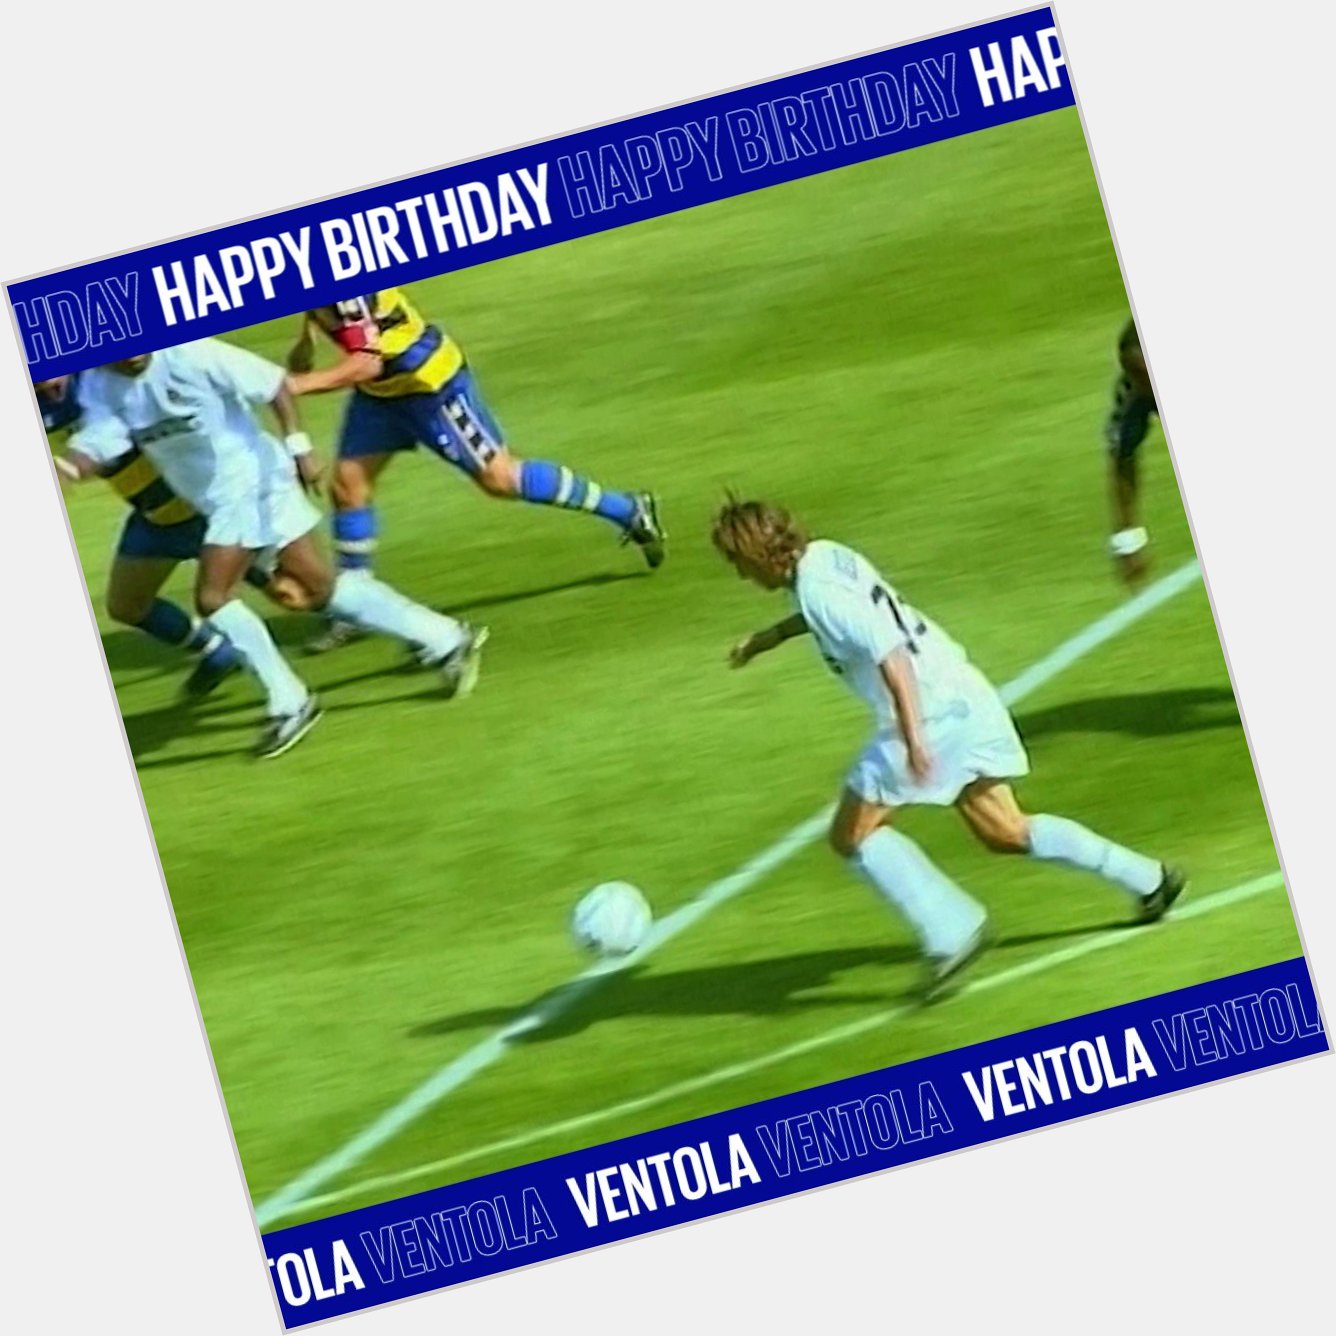  | BIRTHDAY
 
Wishing Nicola Ventola a very happy birthday!  Powered by   